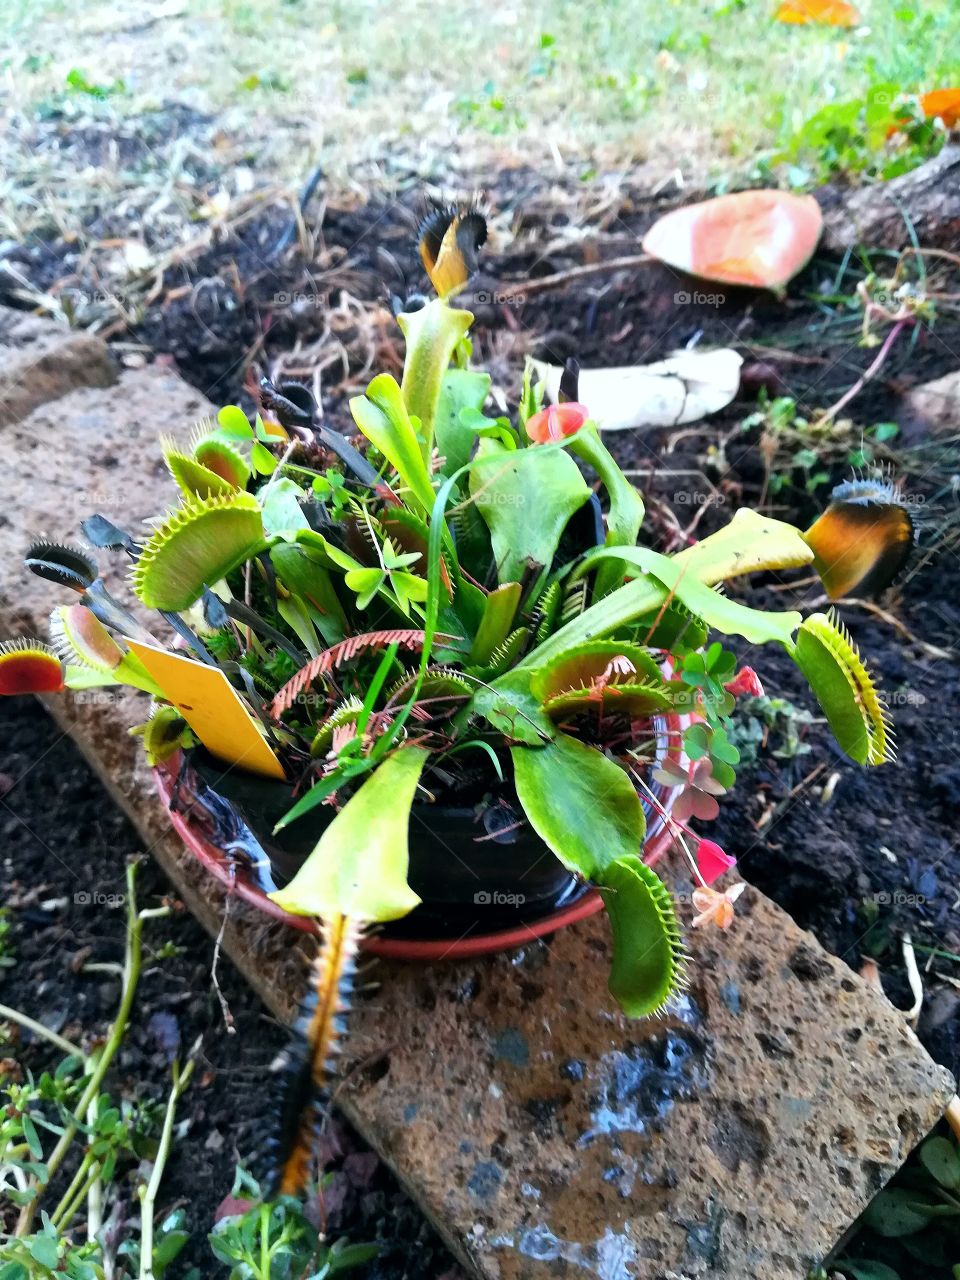 Carnivorous plant in my garden